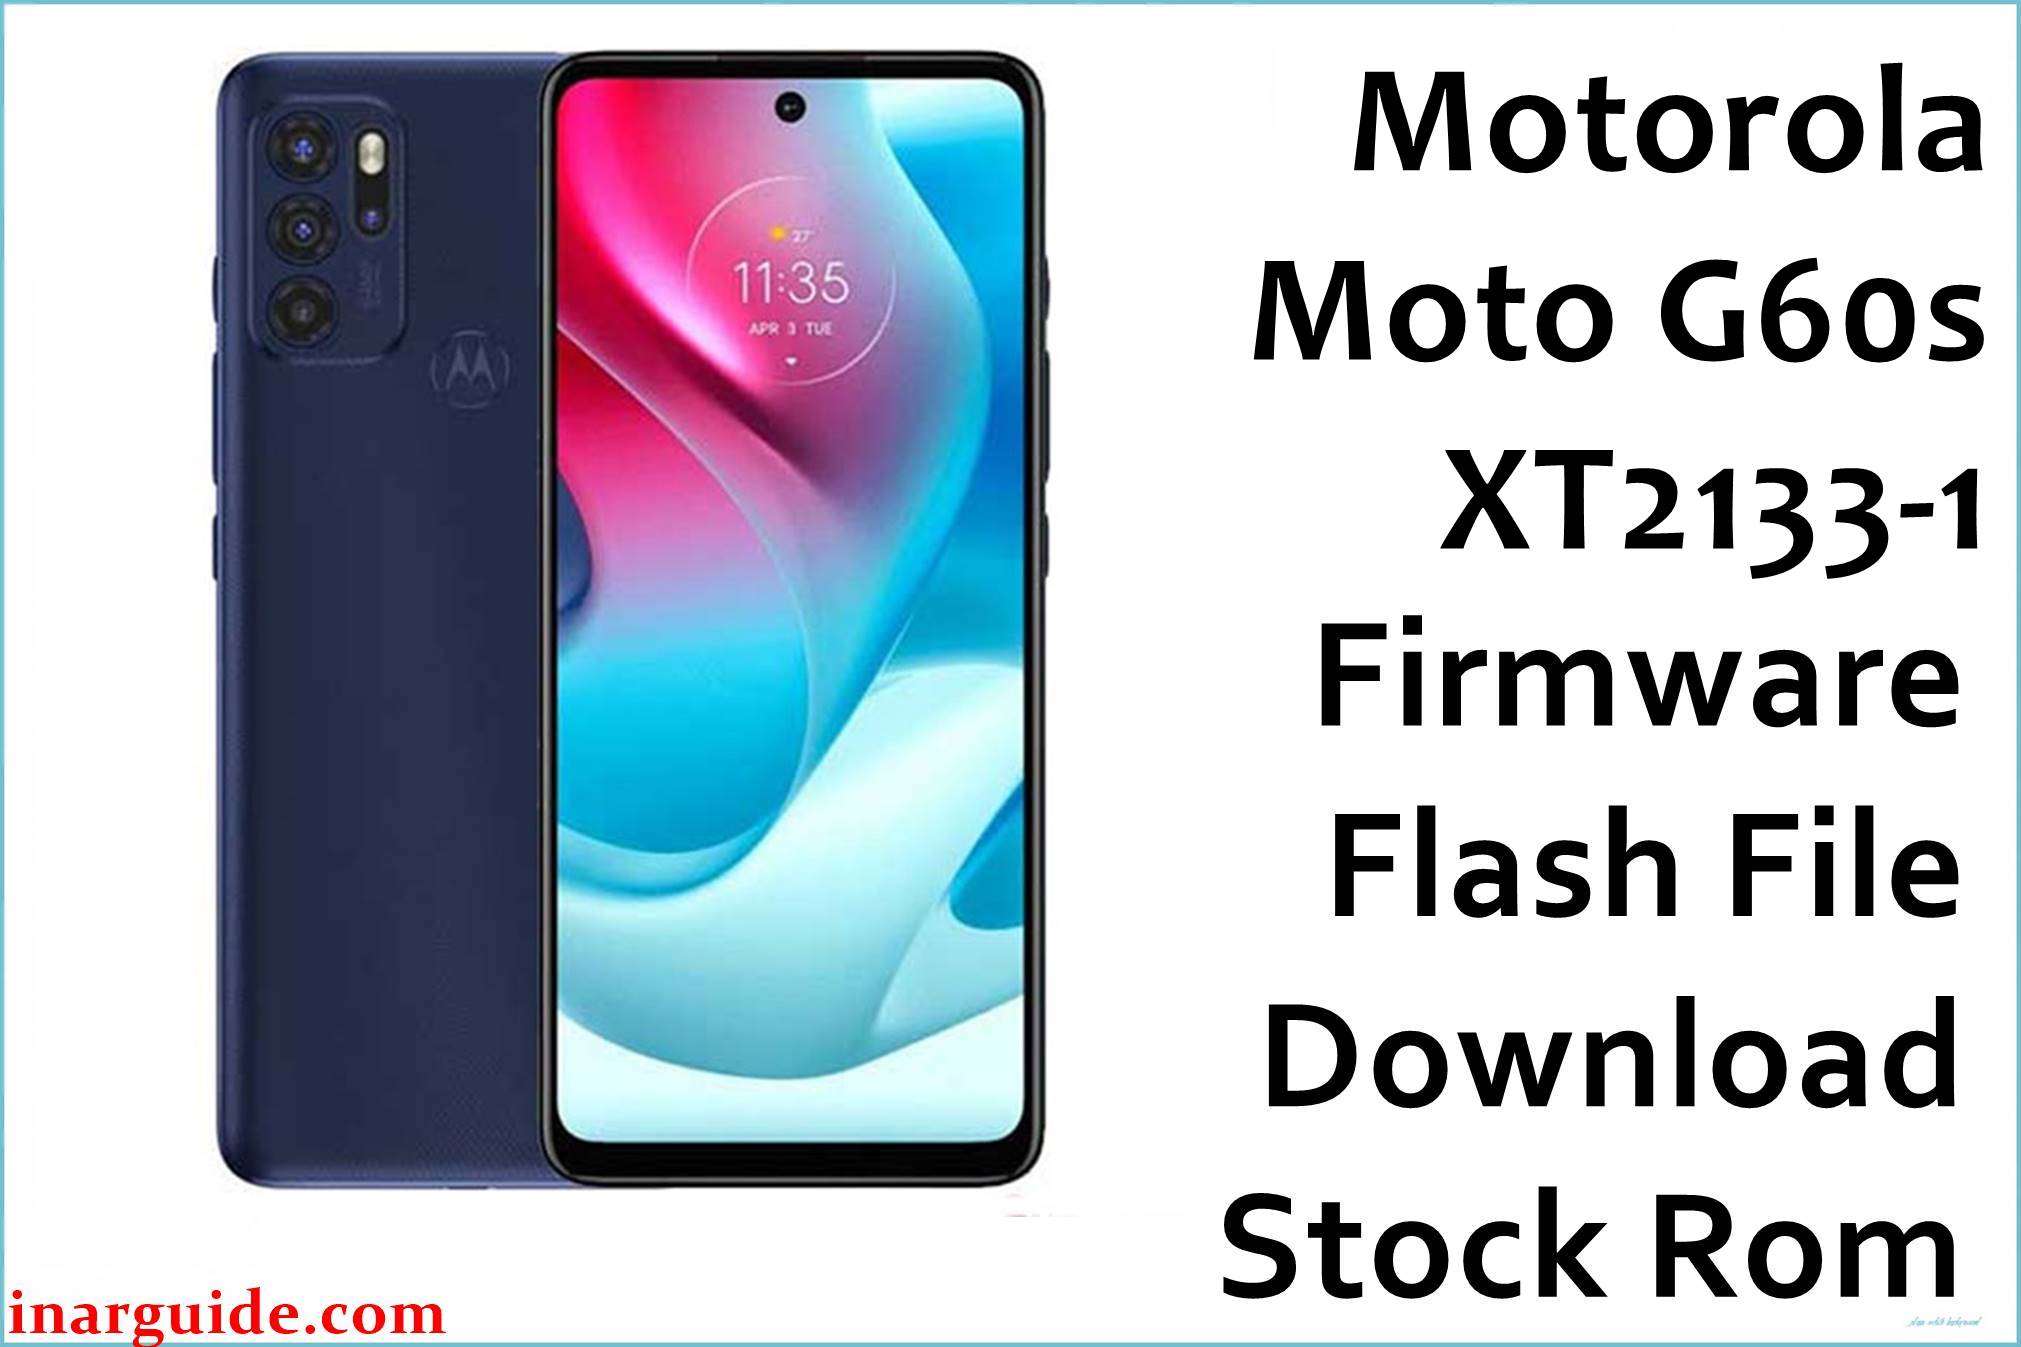 Motorola Moto G60s XT2133-1